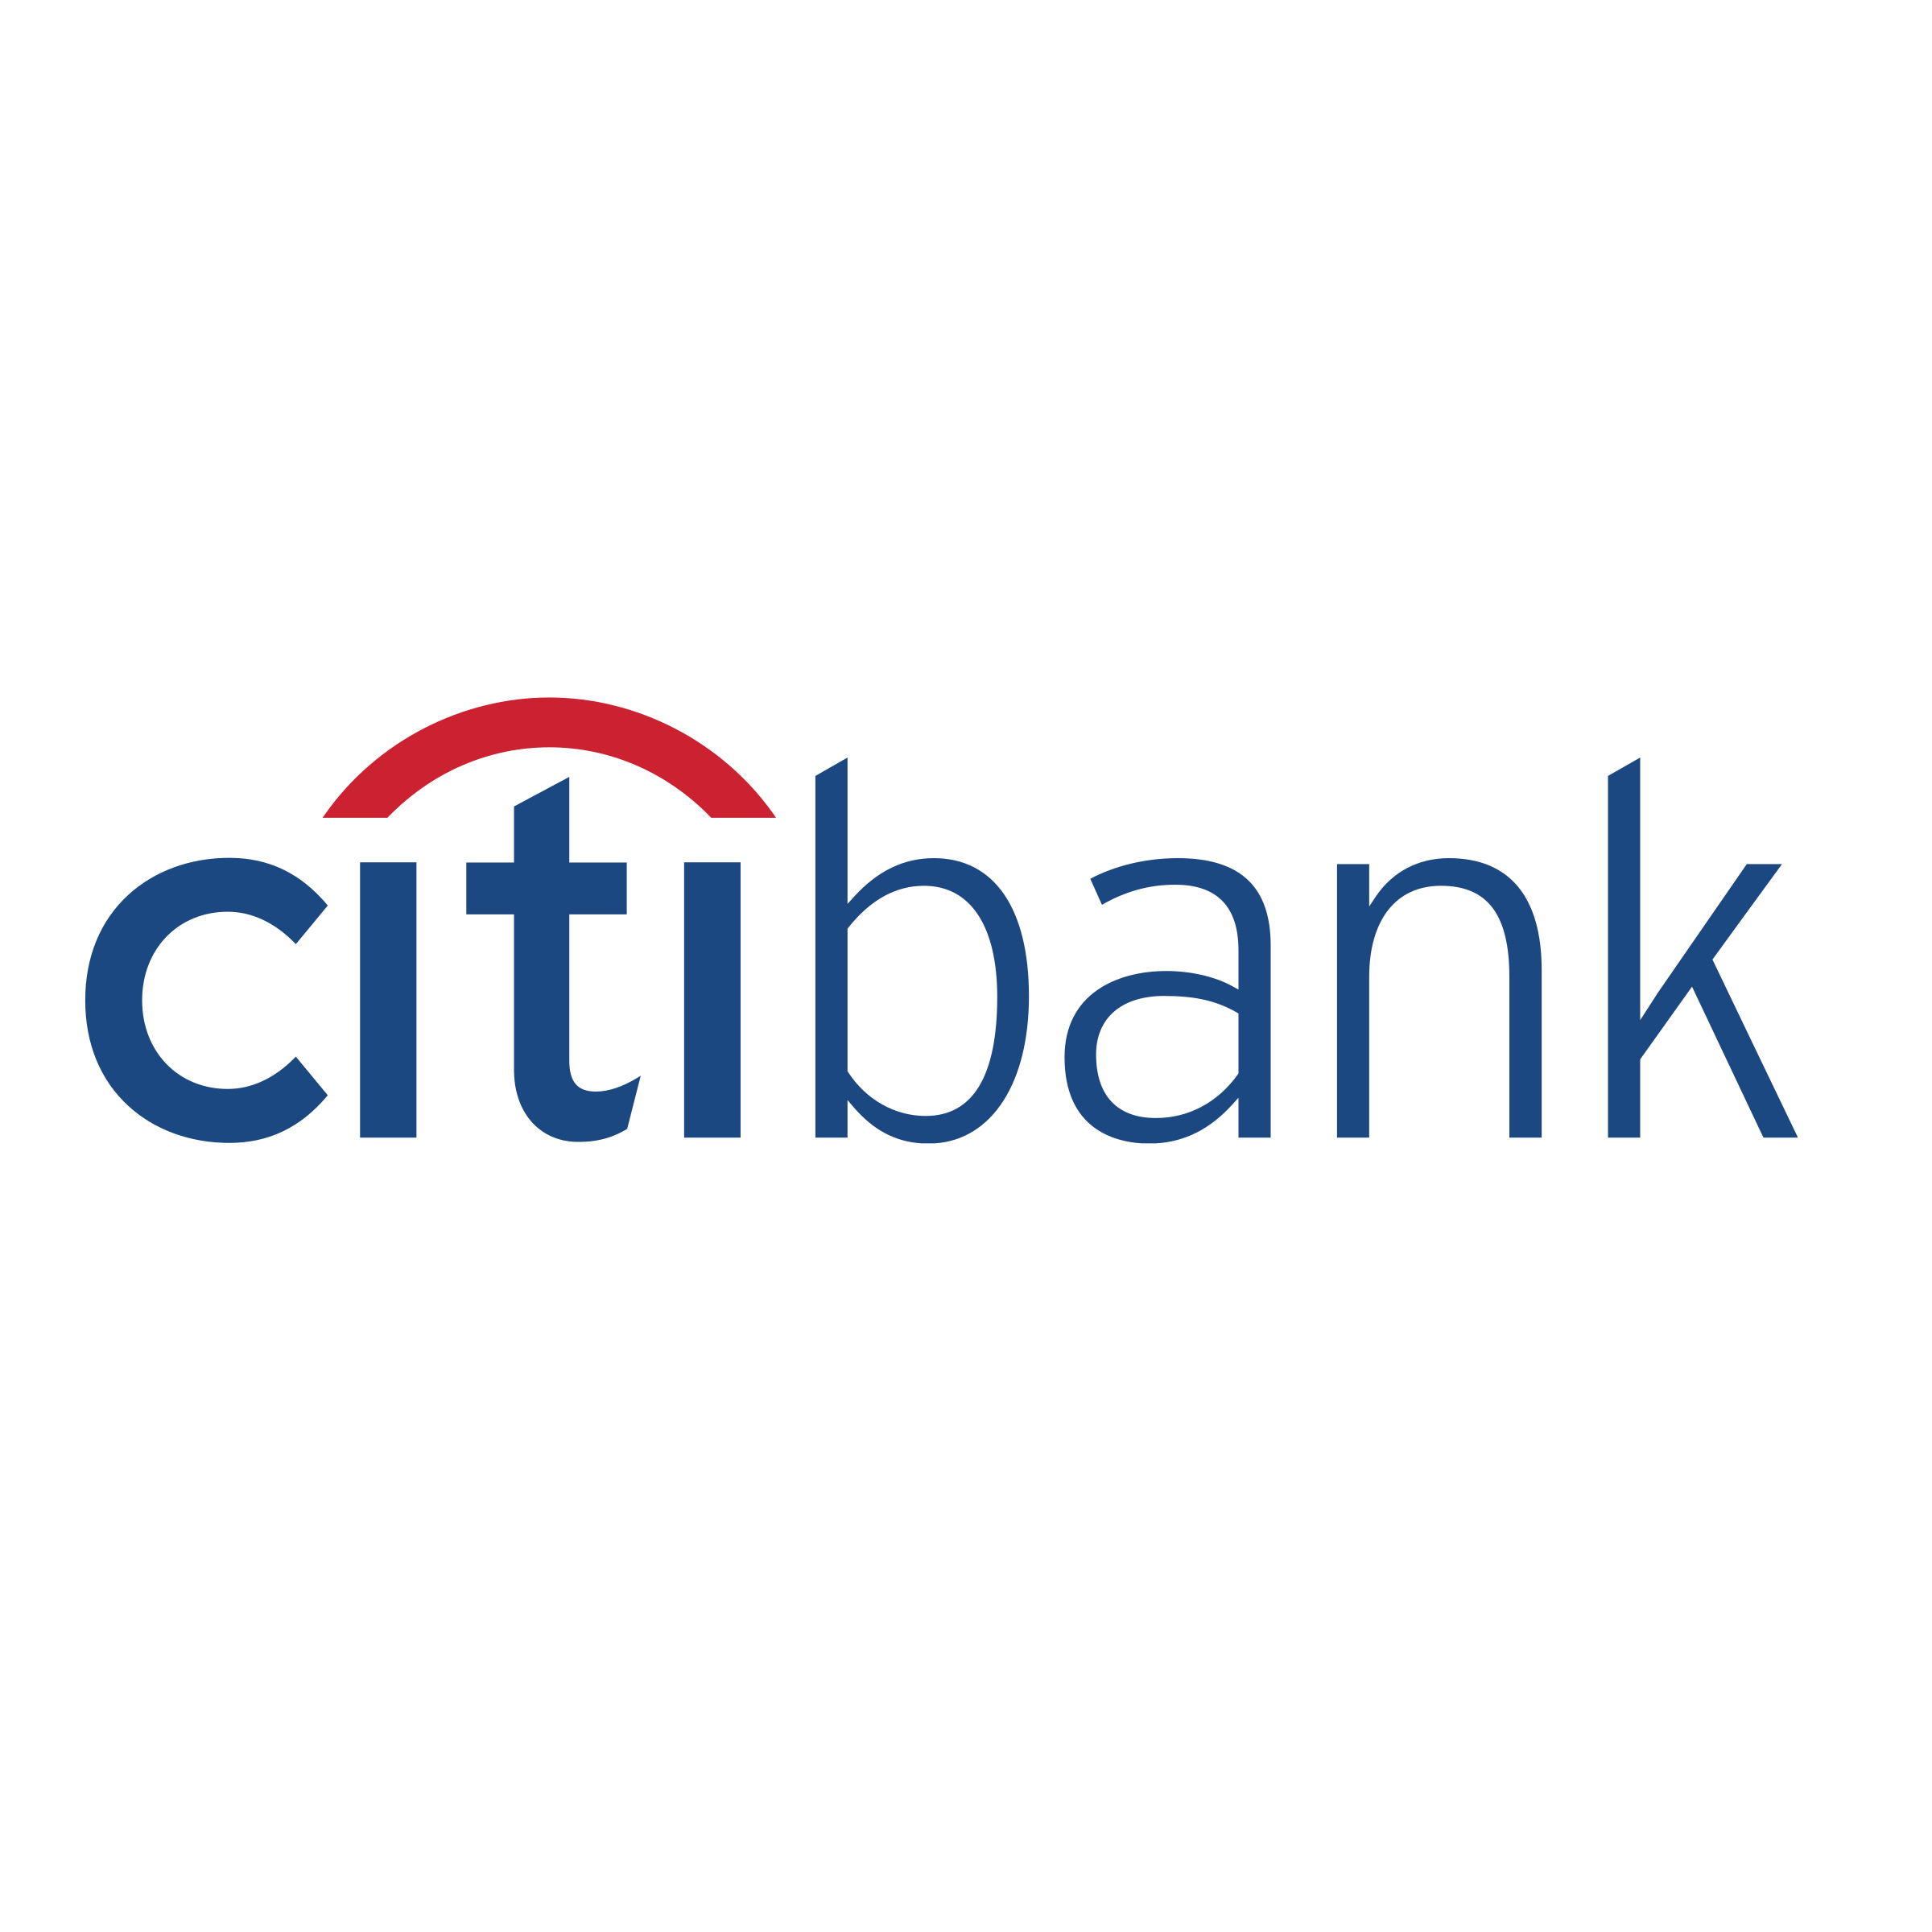 Citibank Logo - Citibank Logo PNG Transparent & SVG Vector - Freebie Supply